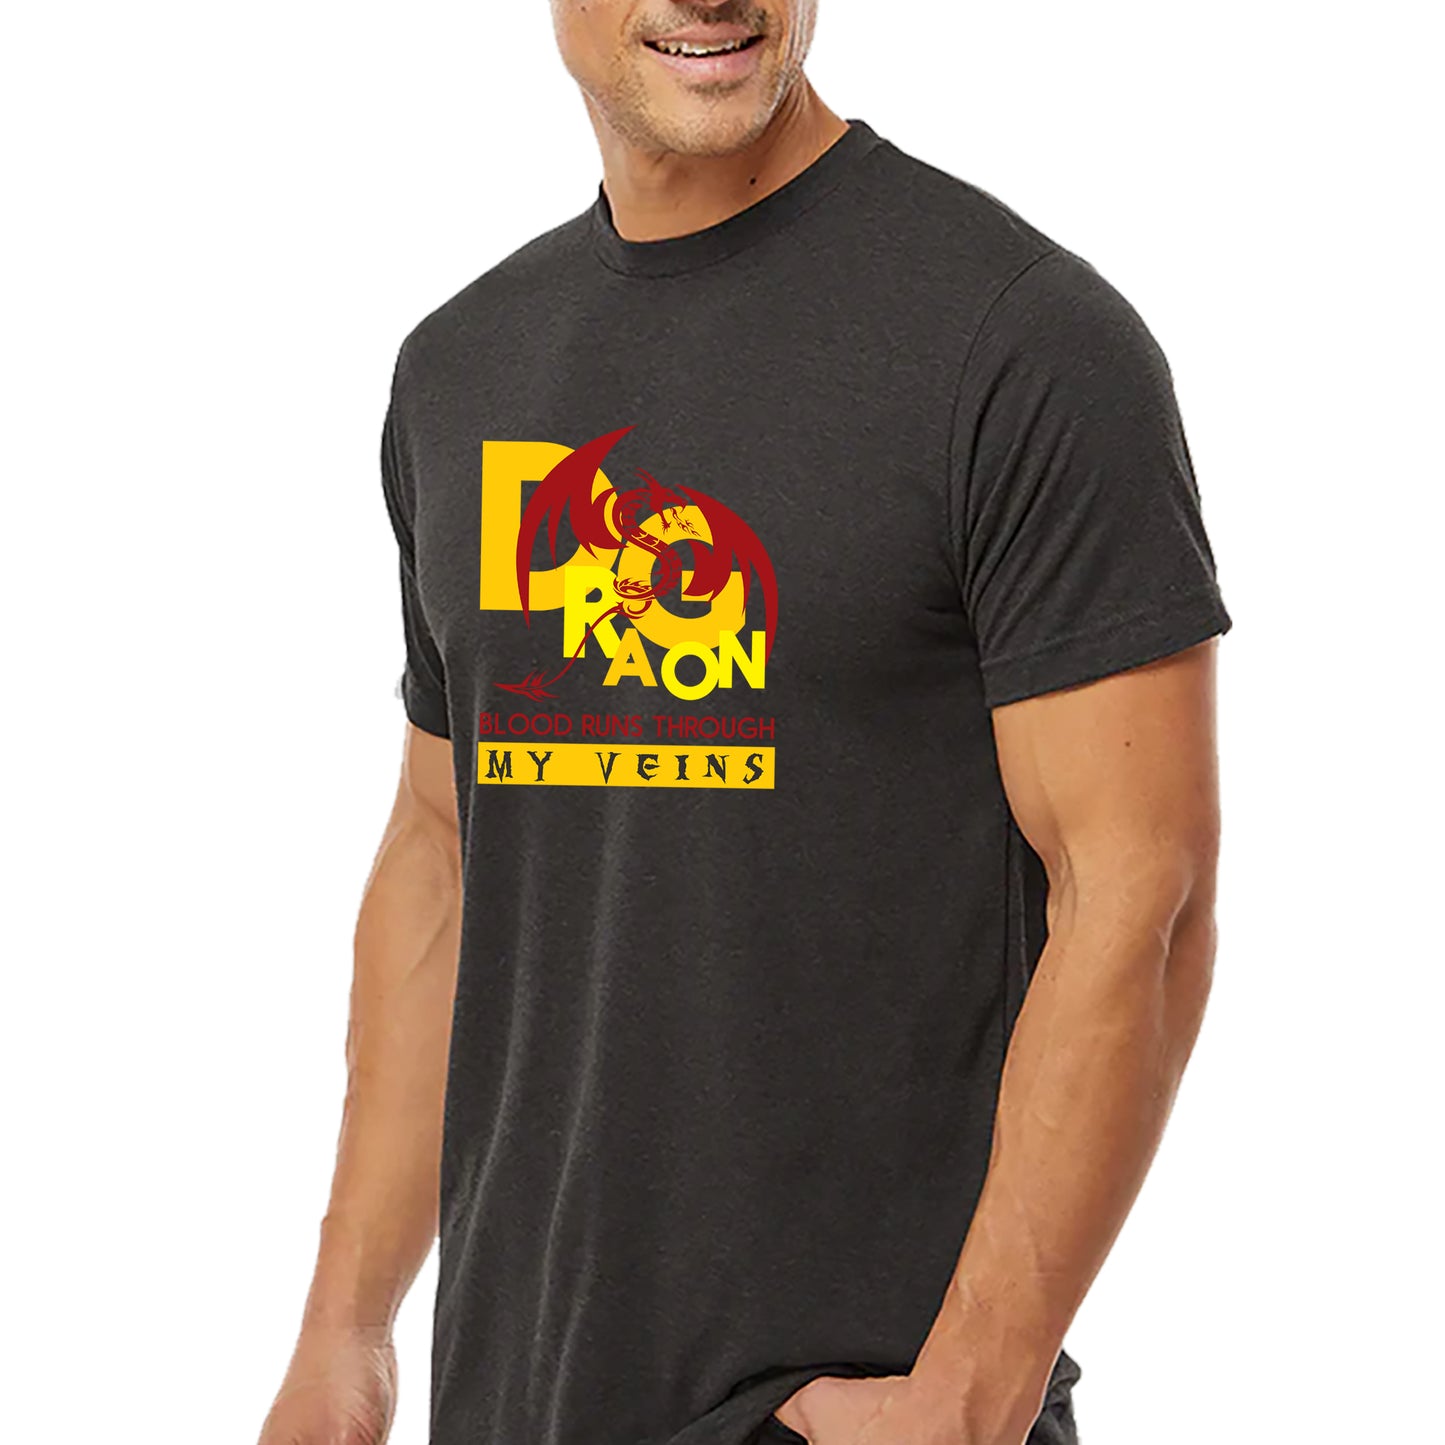 Dragon Blood T-shirt